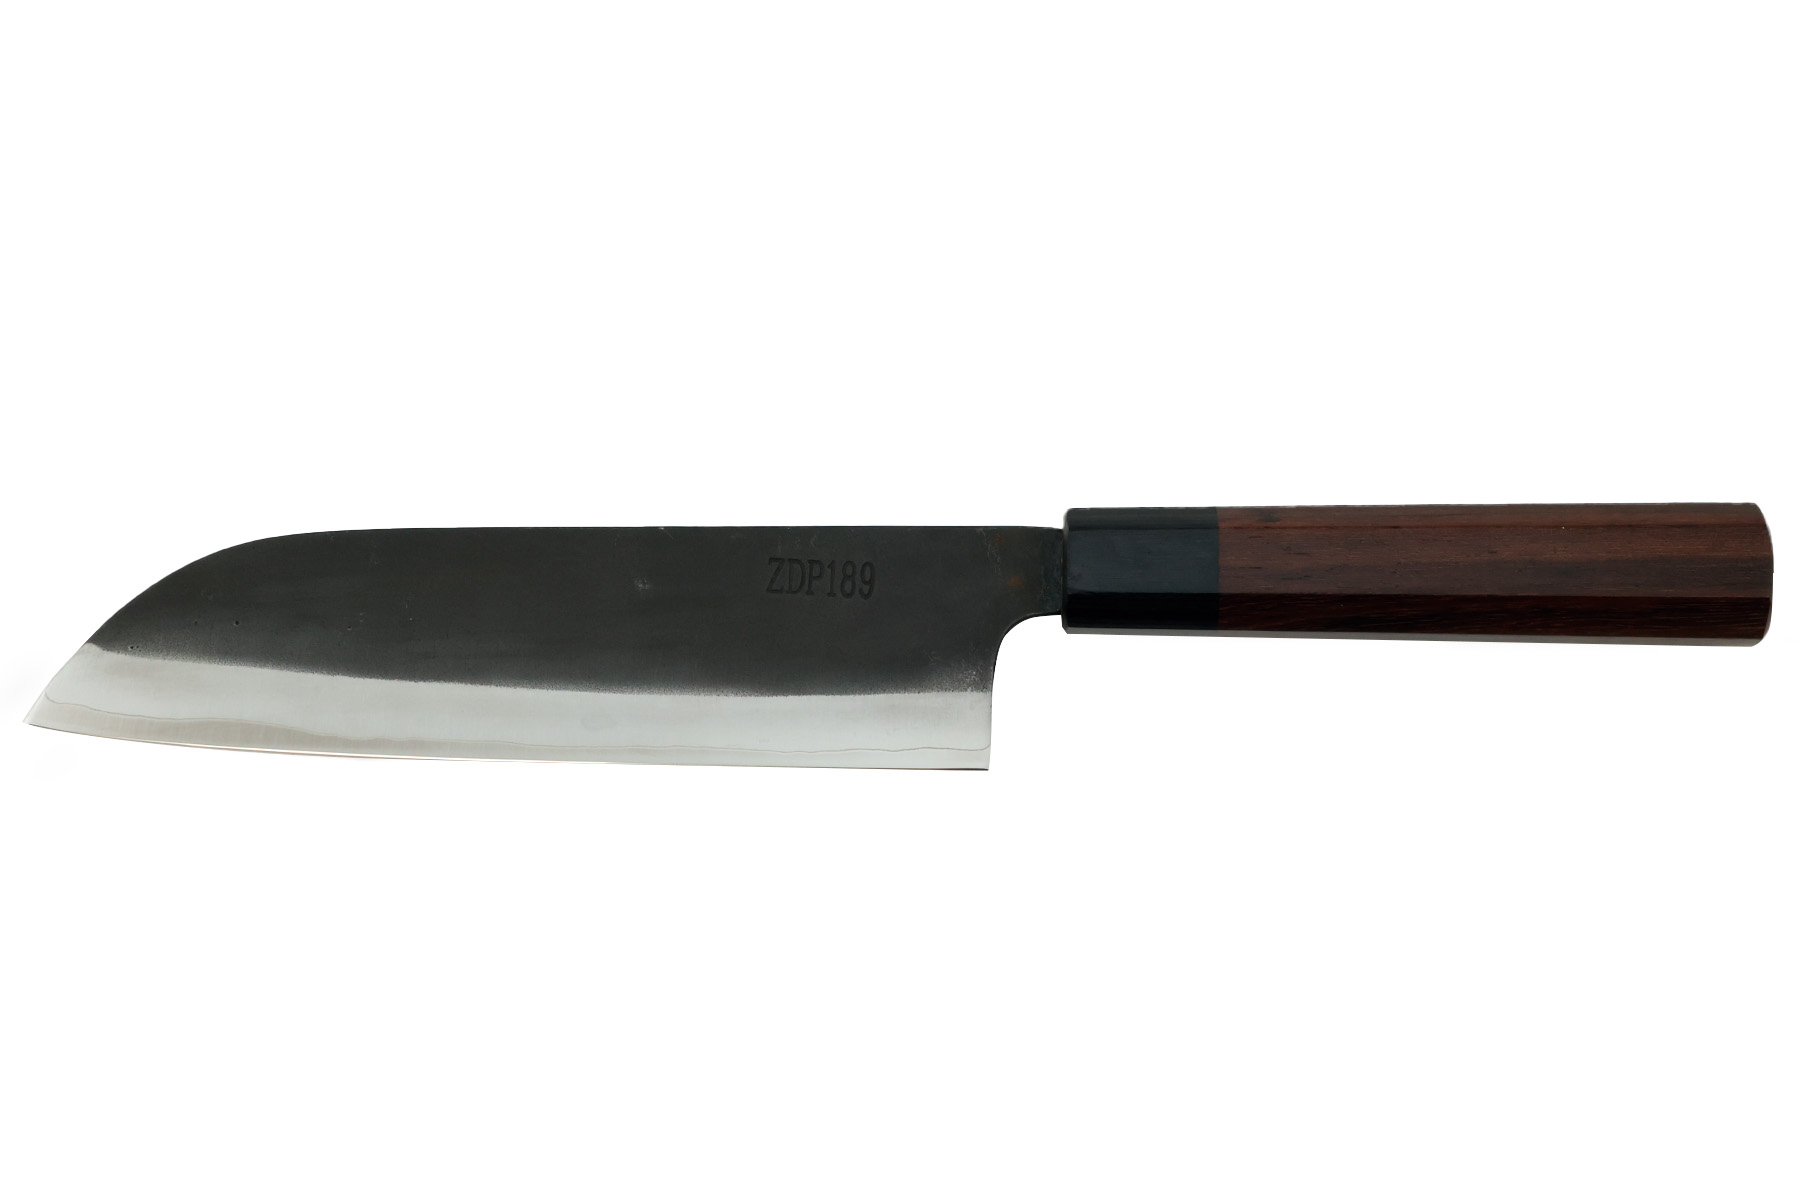 Couteau japonais artisanal de Yoshida Hamono - Couteau Santoku 18 cm - ZDP189 - Rosewood